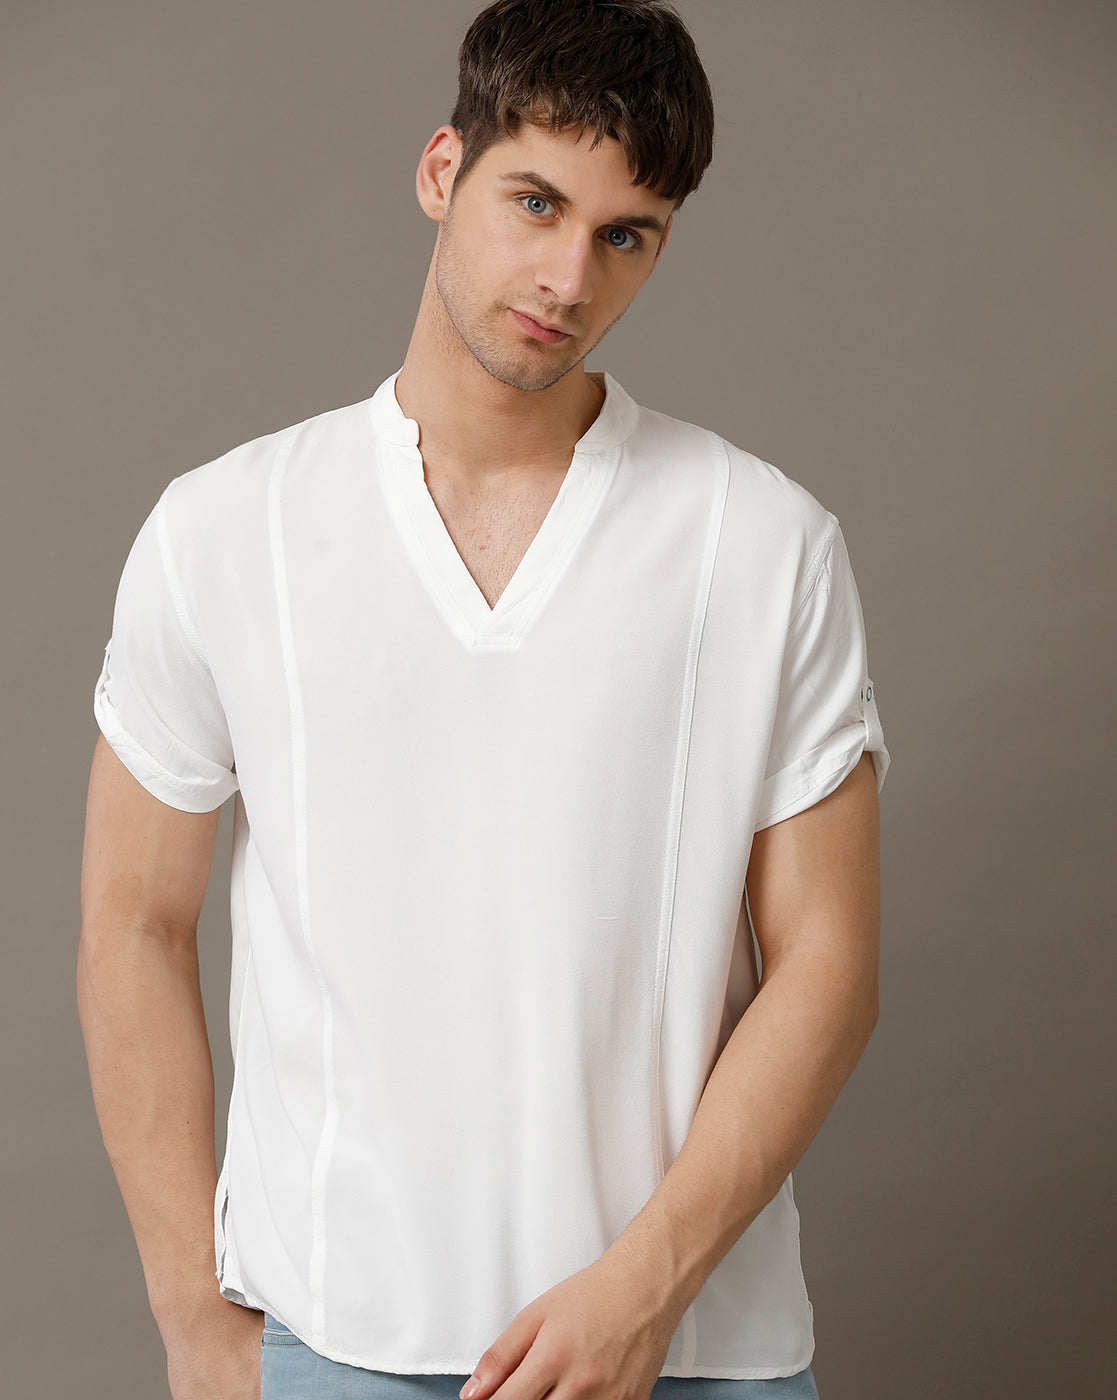 Viscose Check Black White Sleeveless Men Casual Cotton Shirt at Rs 450 in  Gurgaon